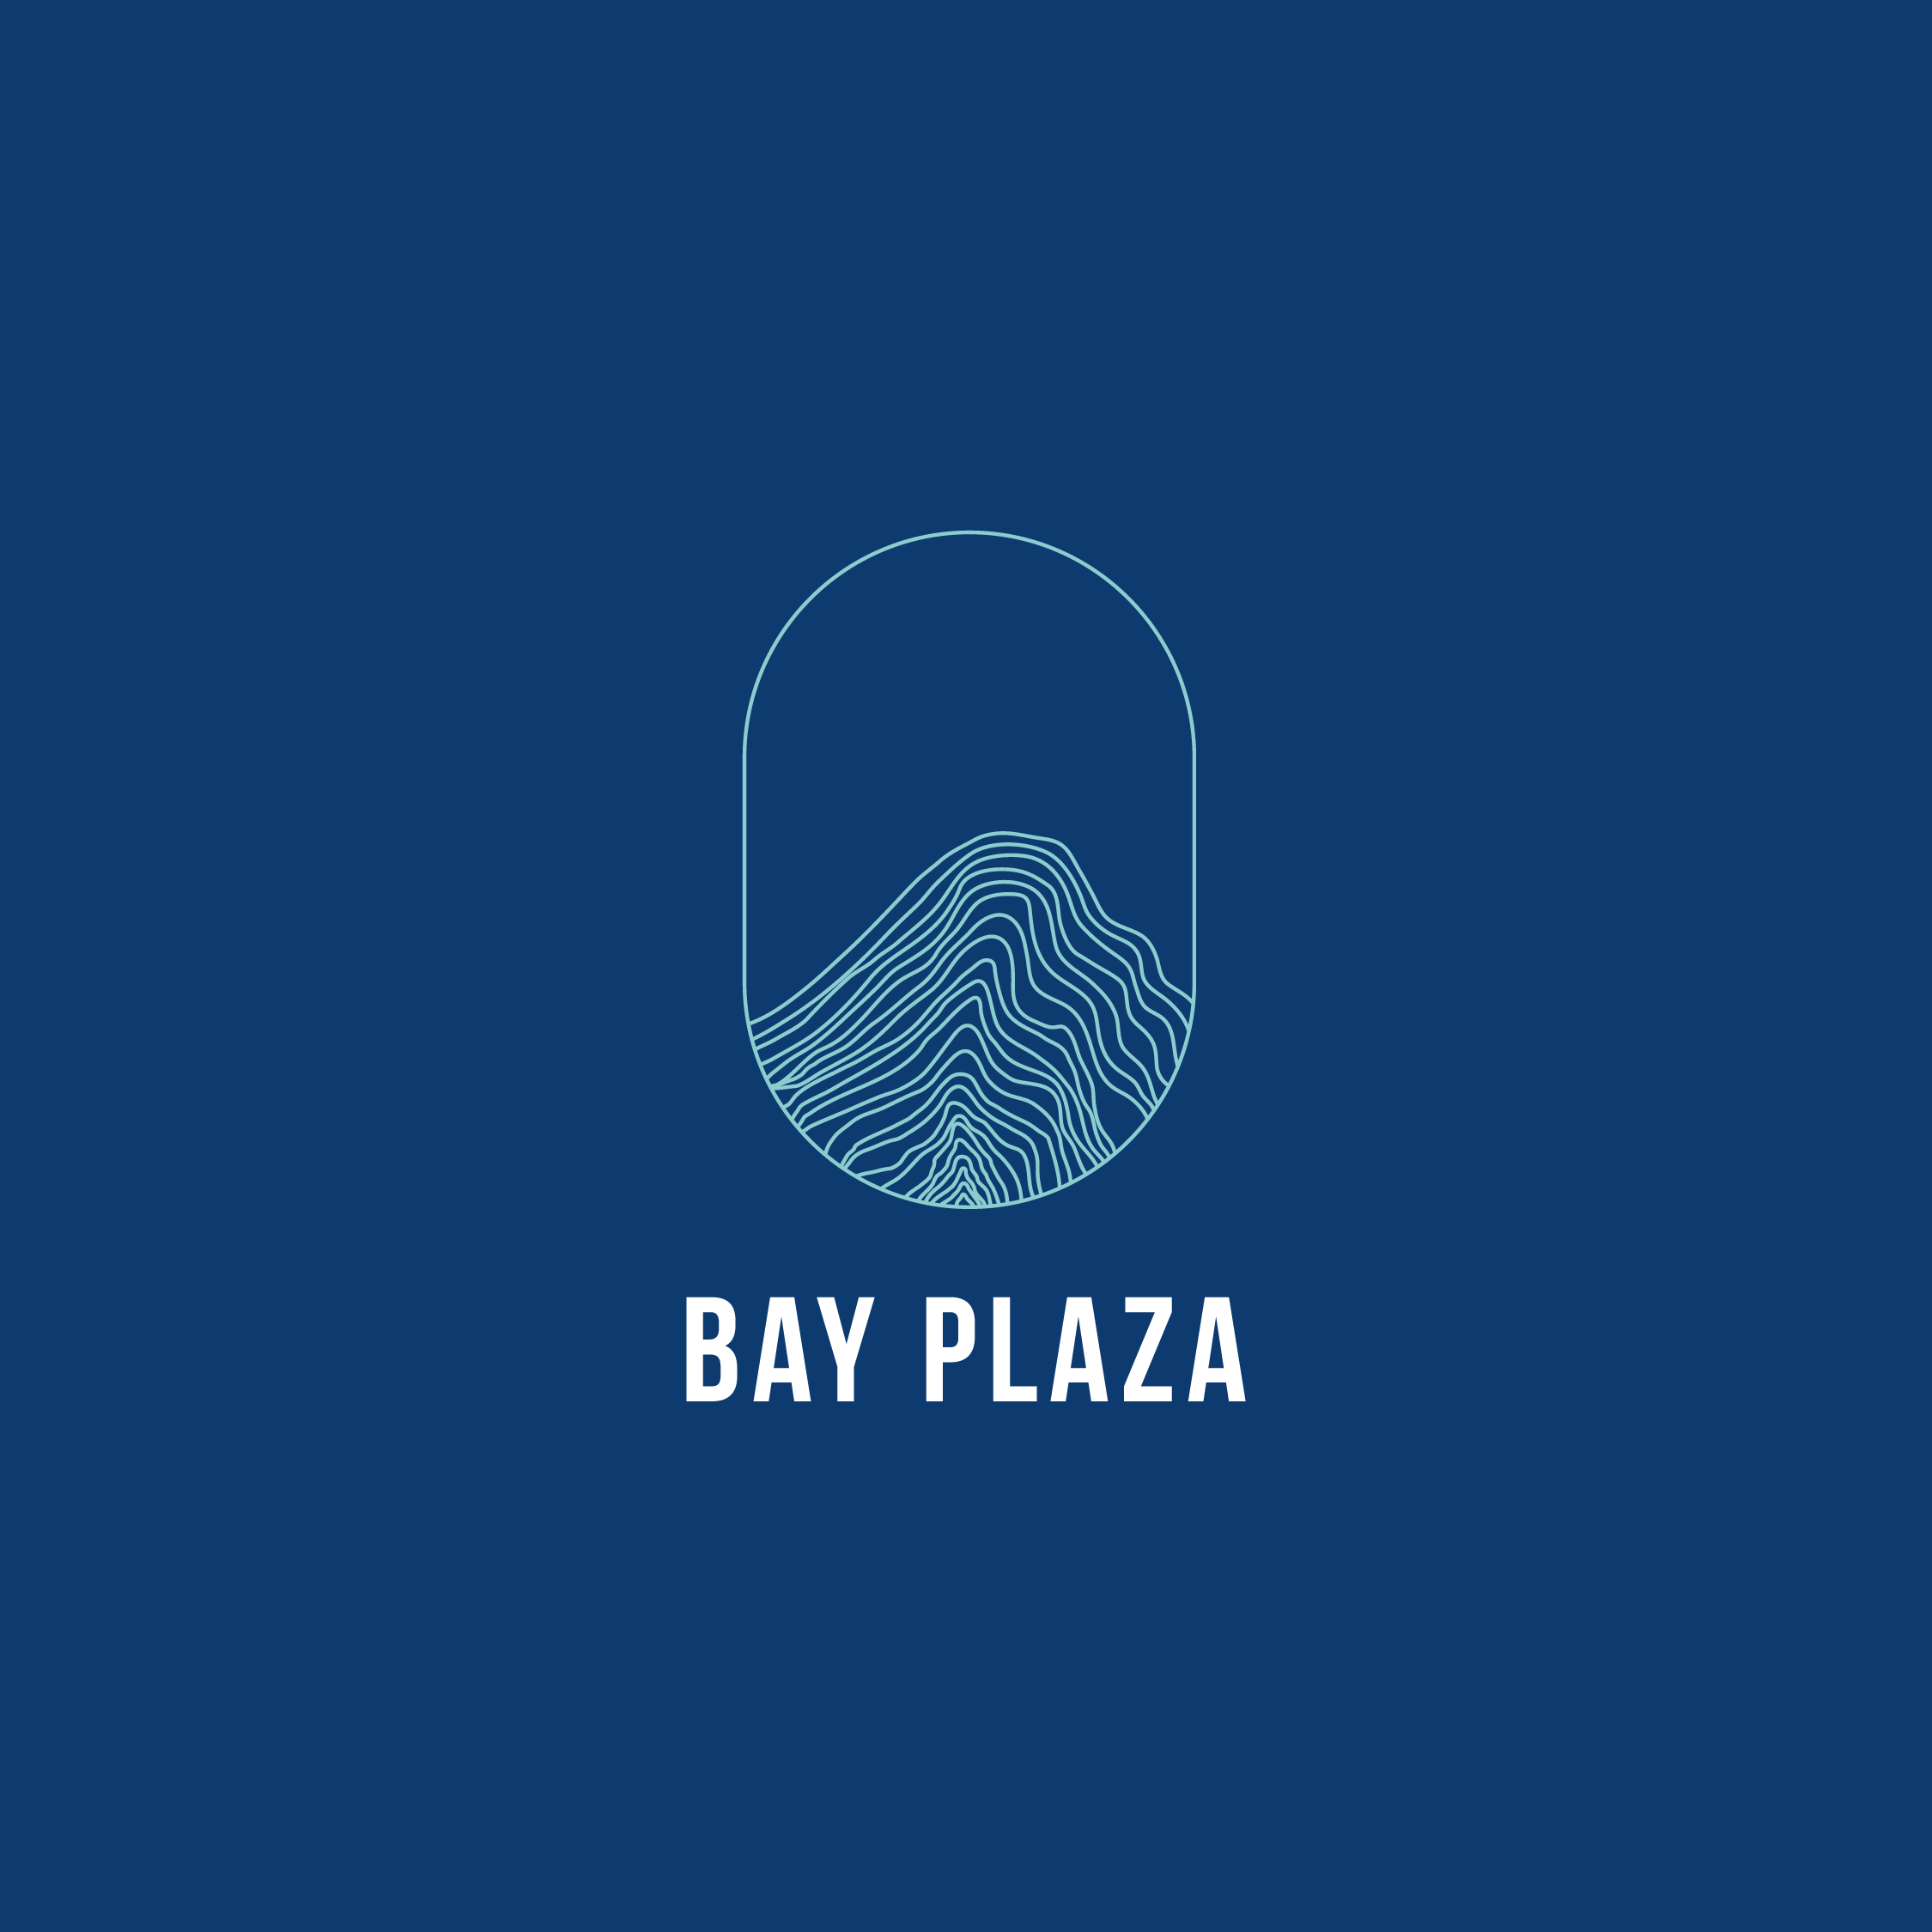 Bay Plaza | Project Studio